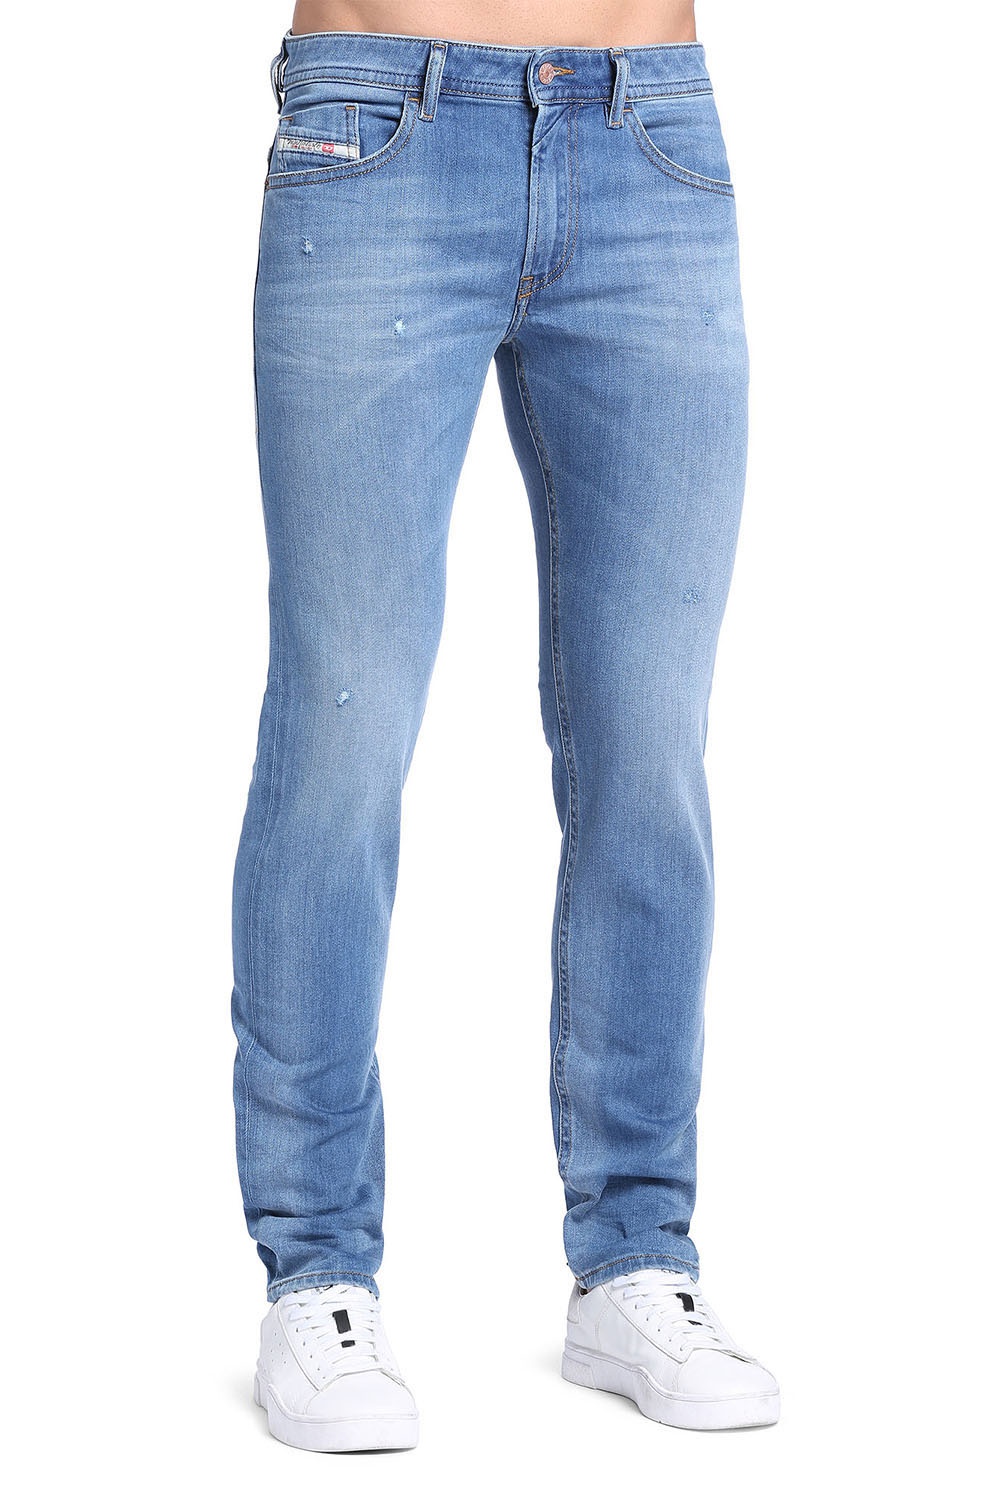 Diesel Denim Men's Jeans | Odel.lk